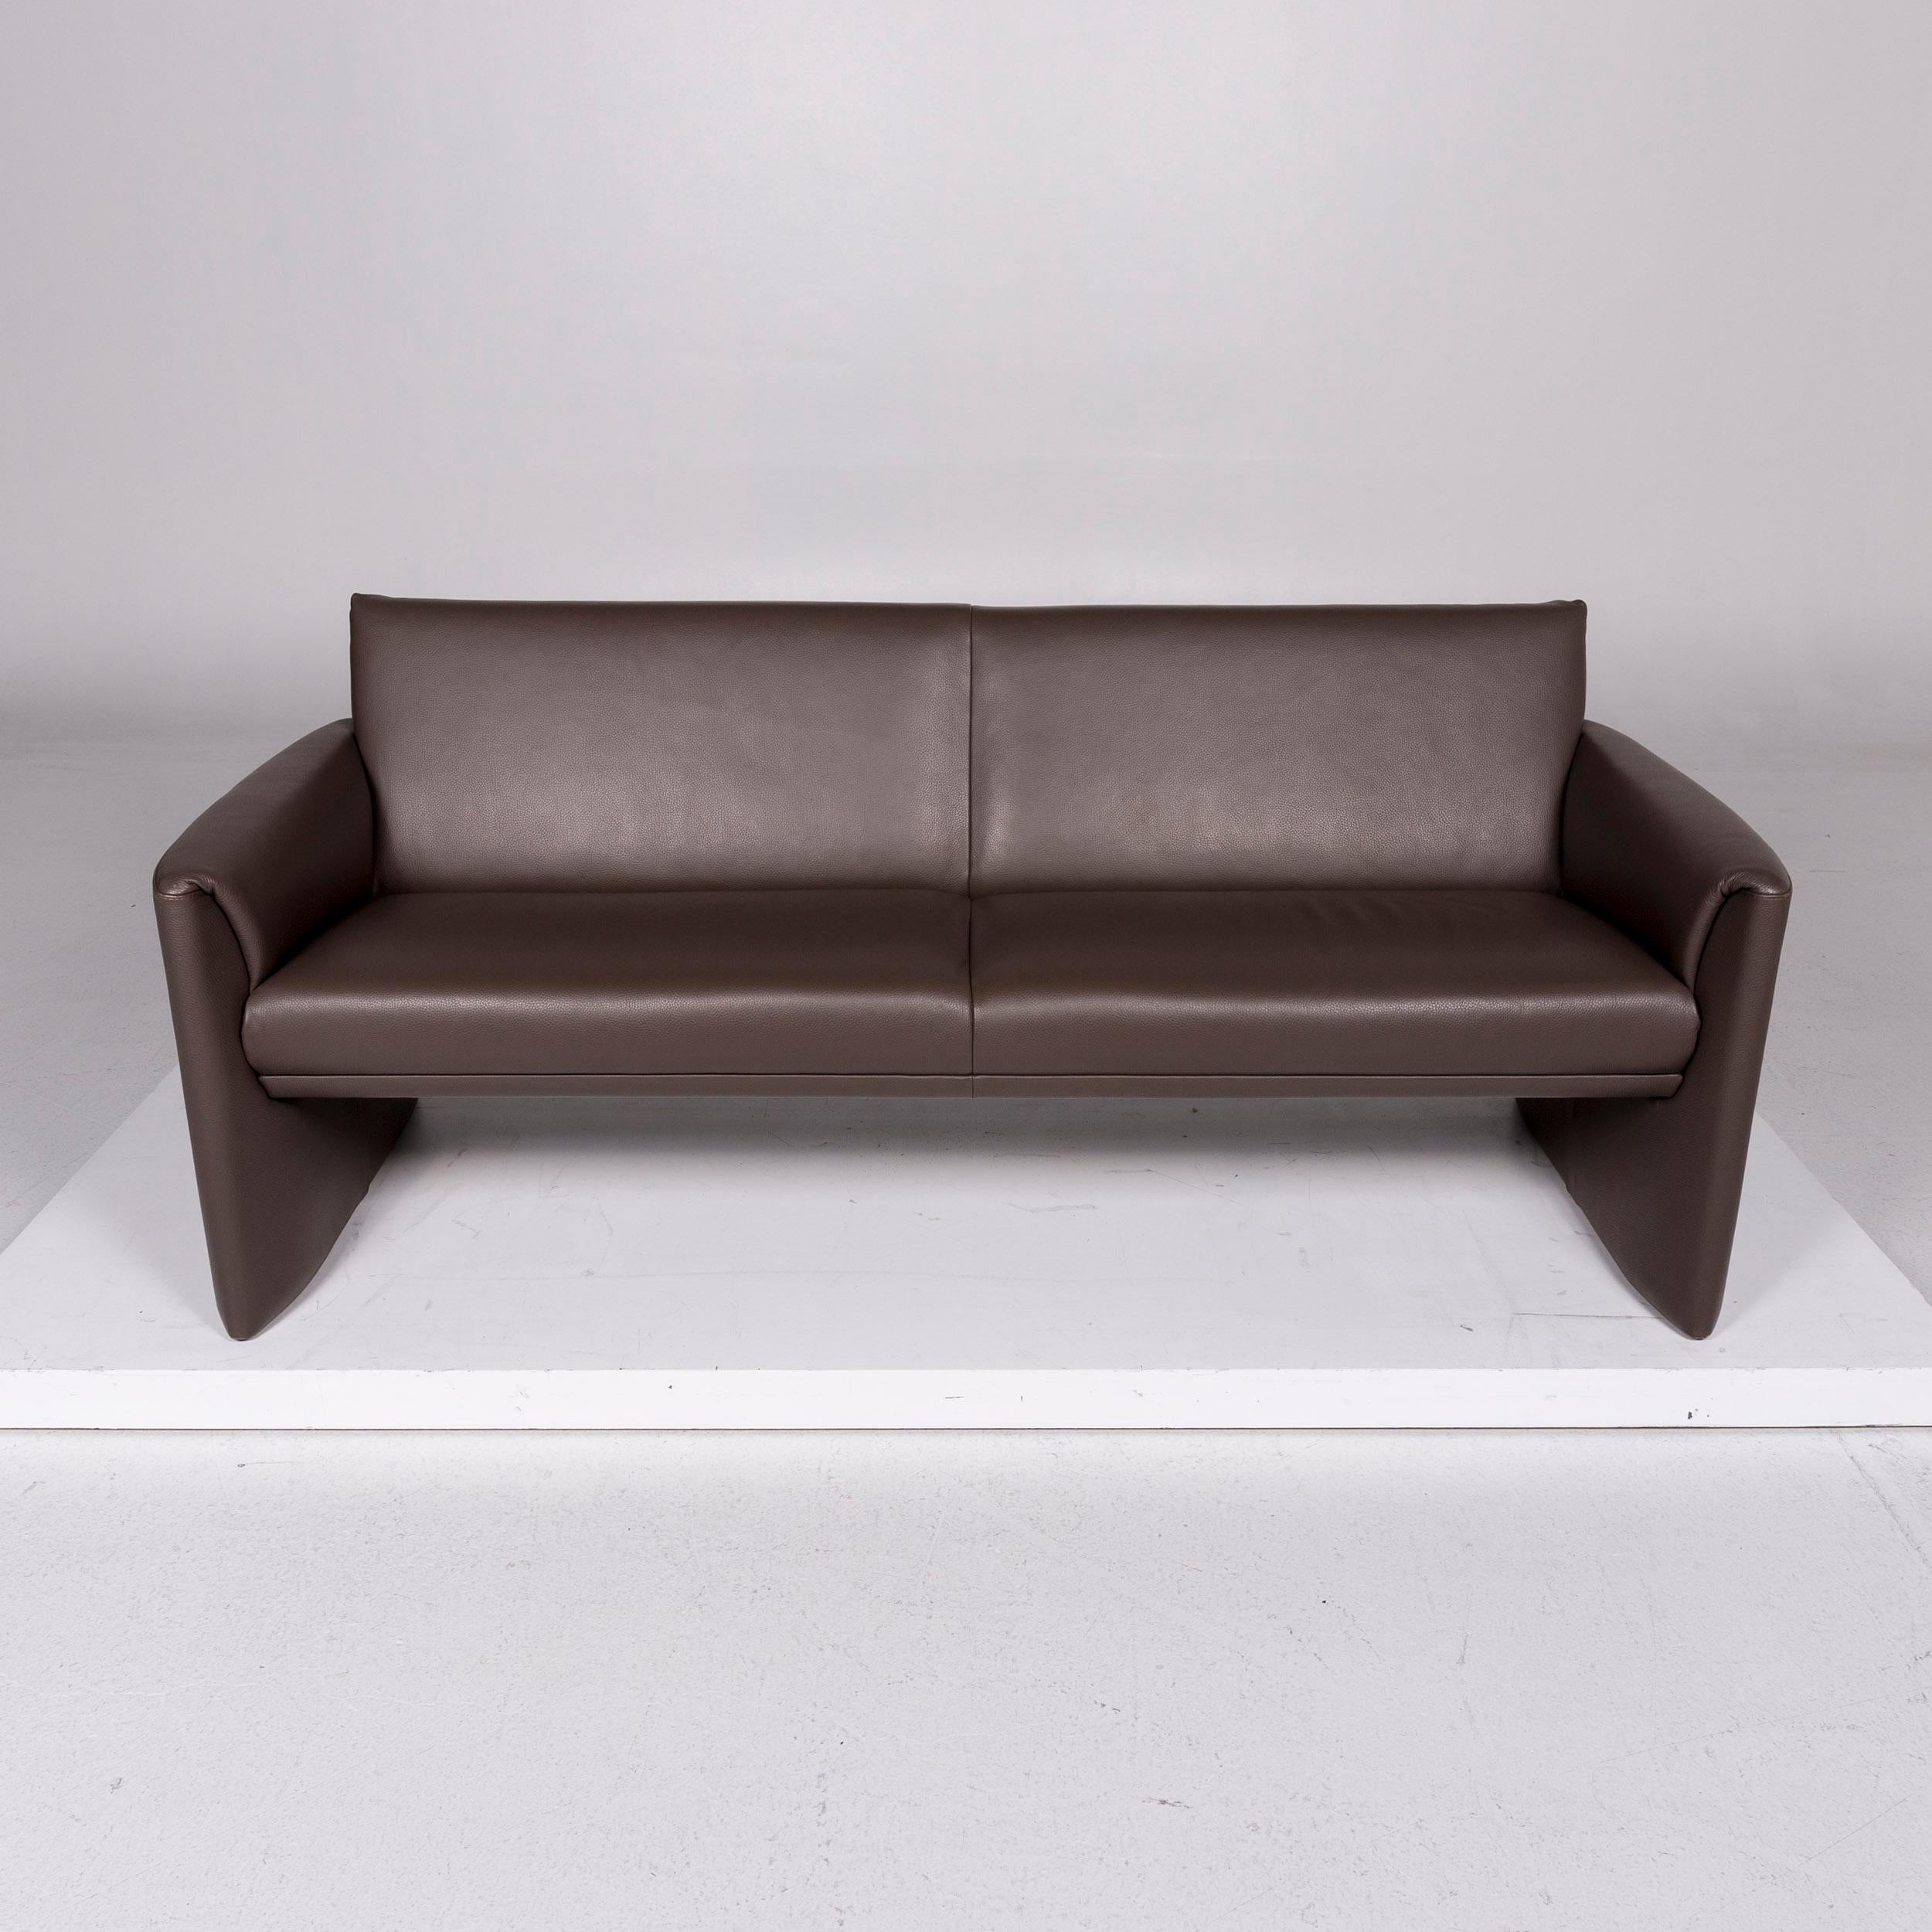 Leolux Boavista Leather Sofa Brown Three-Seat Couch In Excellent Condition For Sale In Cologne, DE